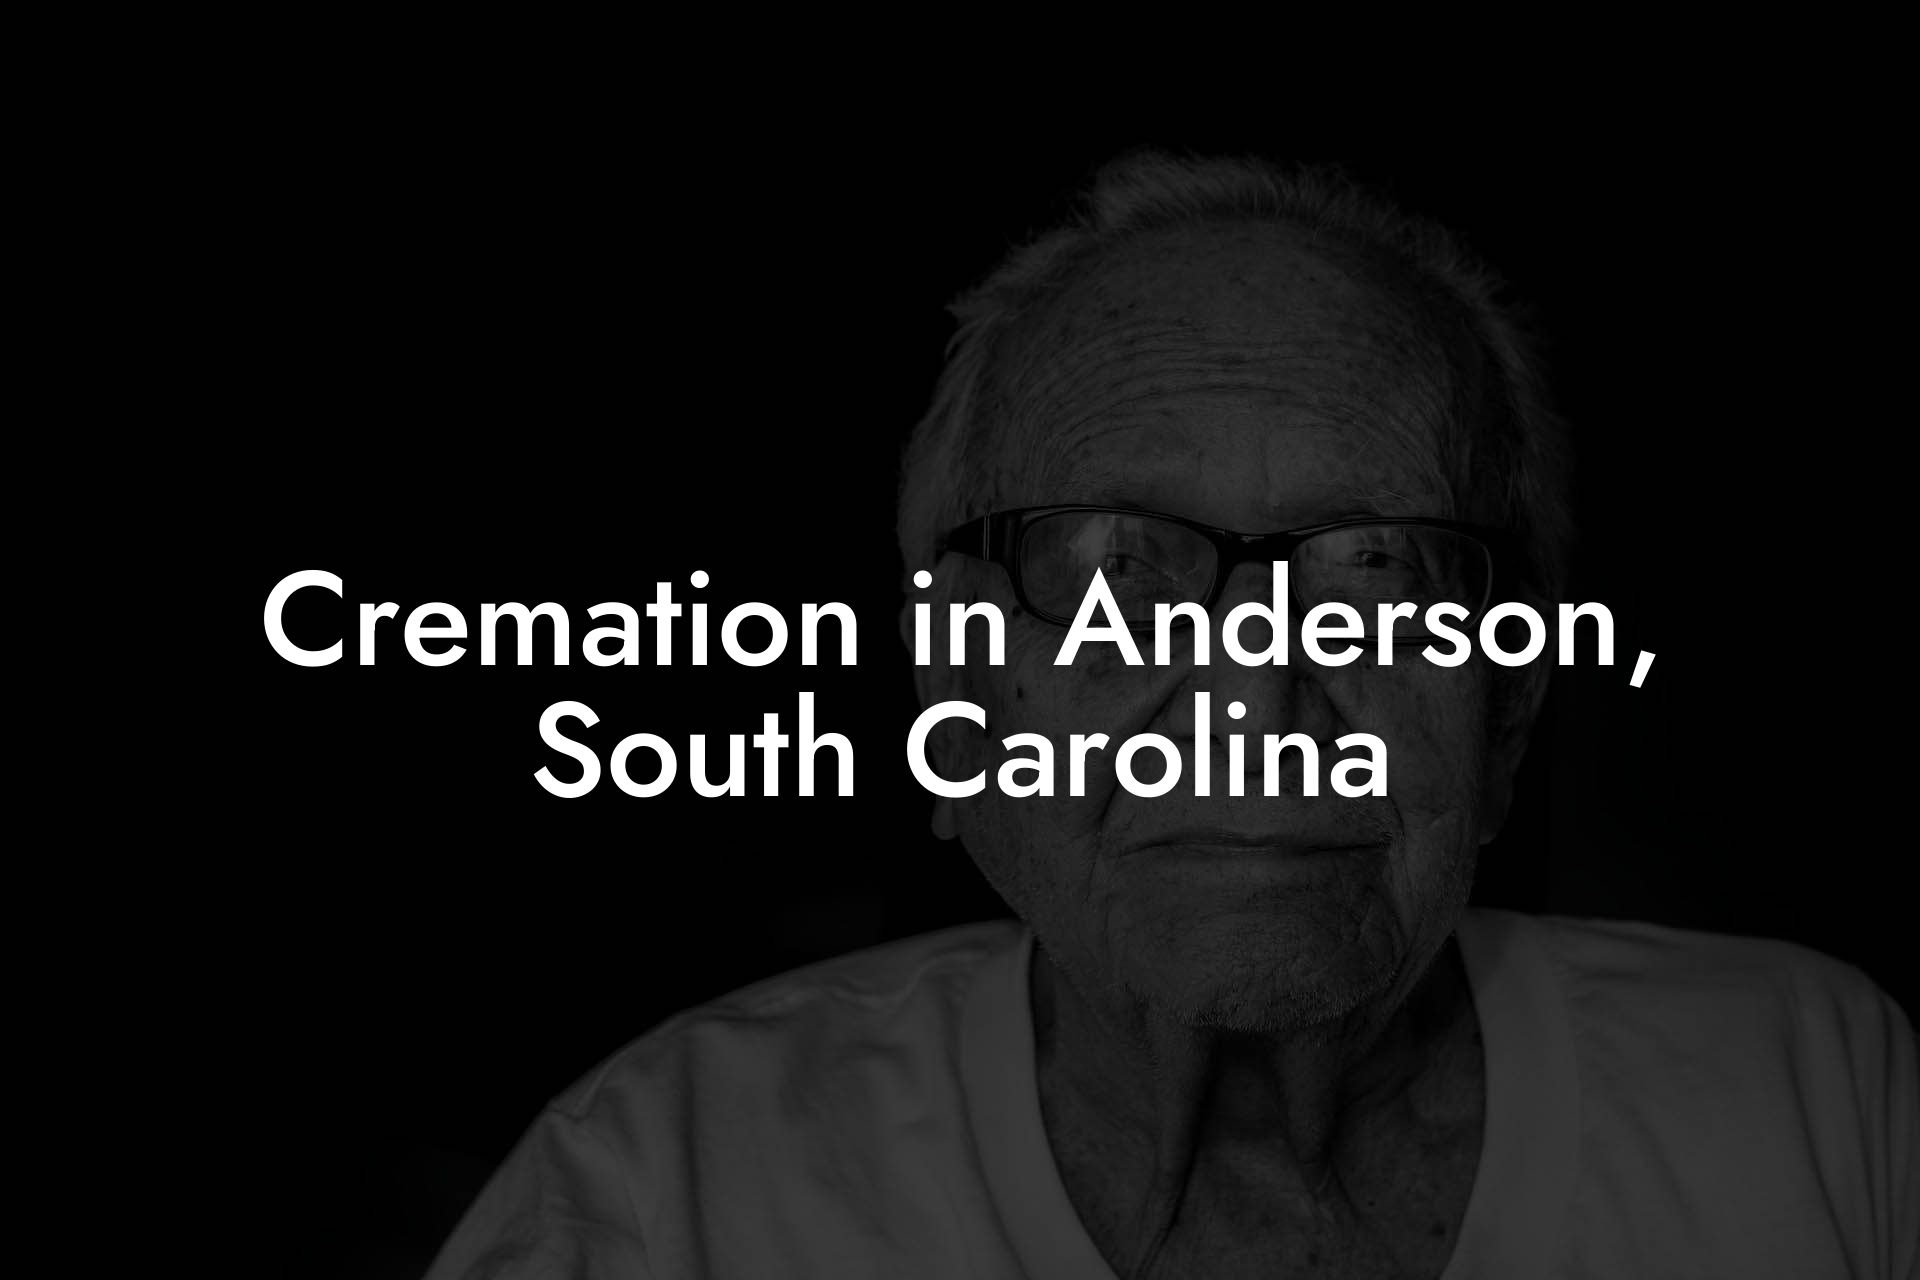 Cremation in Anderson, South Carolina